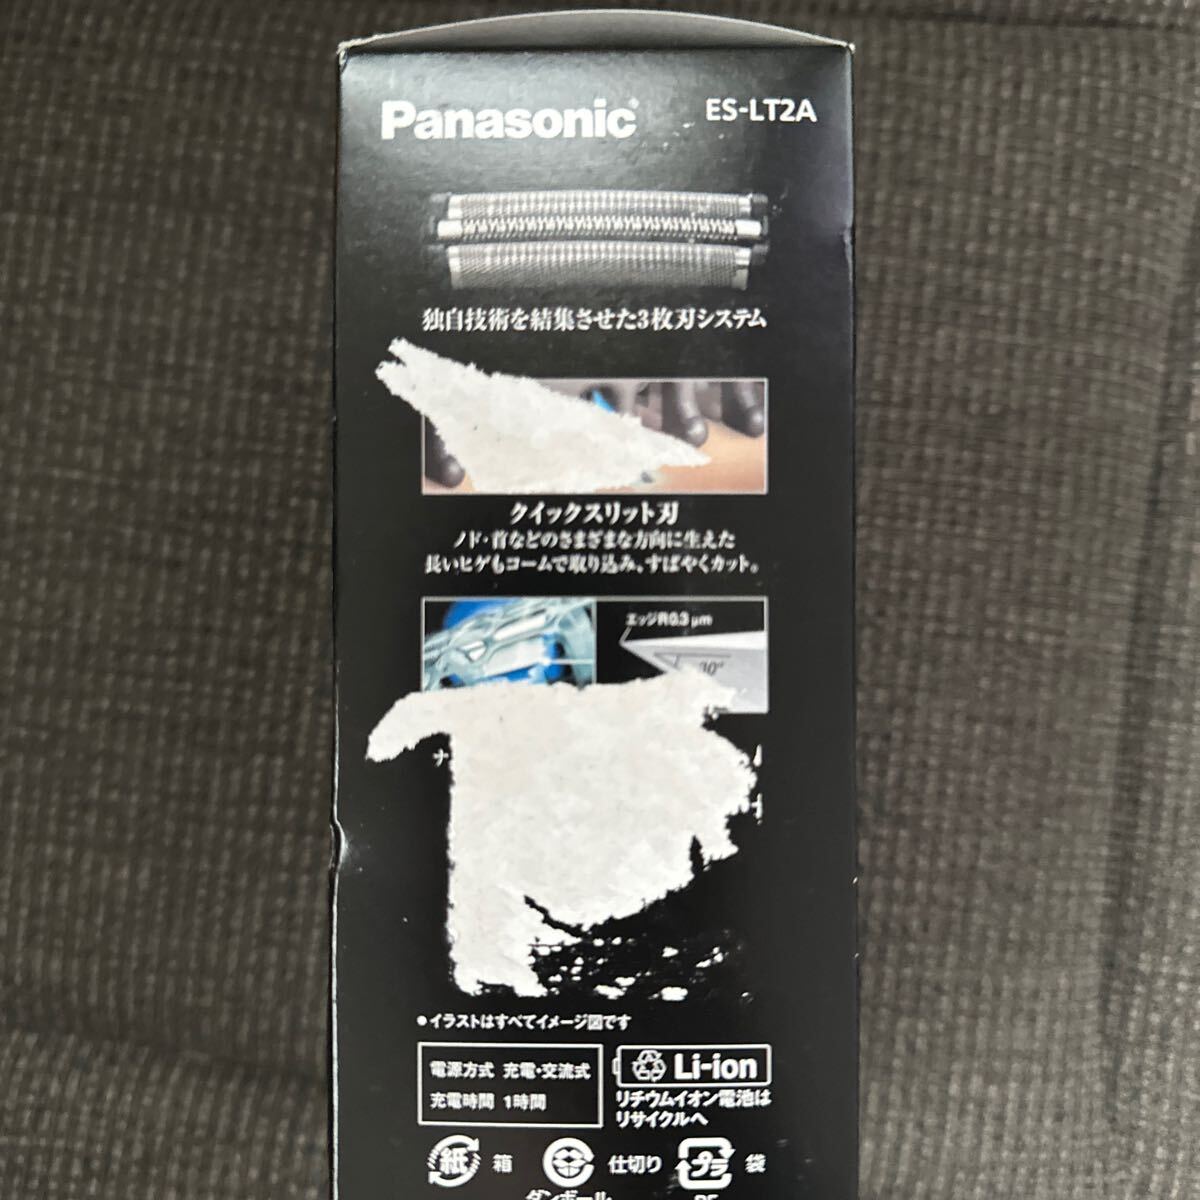 Panasonic 新品 未使用パナソニック ラムダッシュ 電気シェーバー ES-LT2A ブラック メンズシェーバー 髭剃り シェーバー 3枚刃の画像3